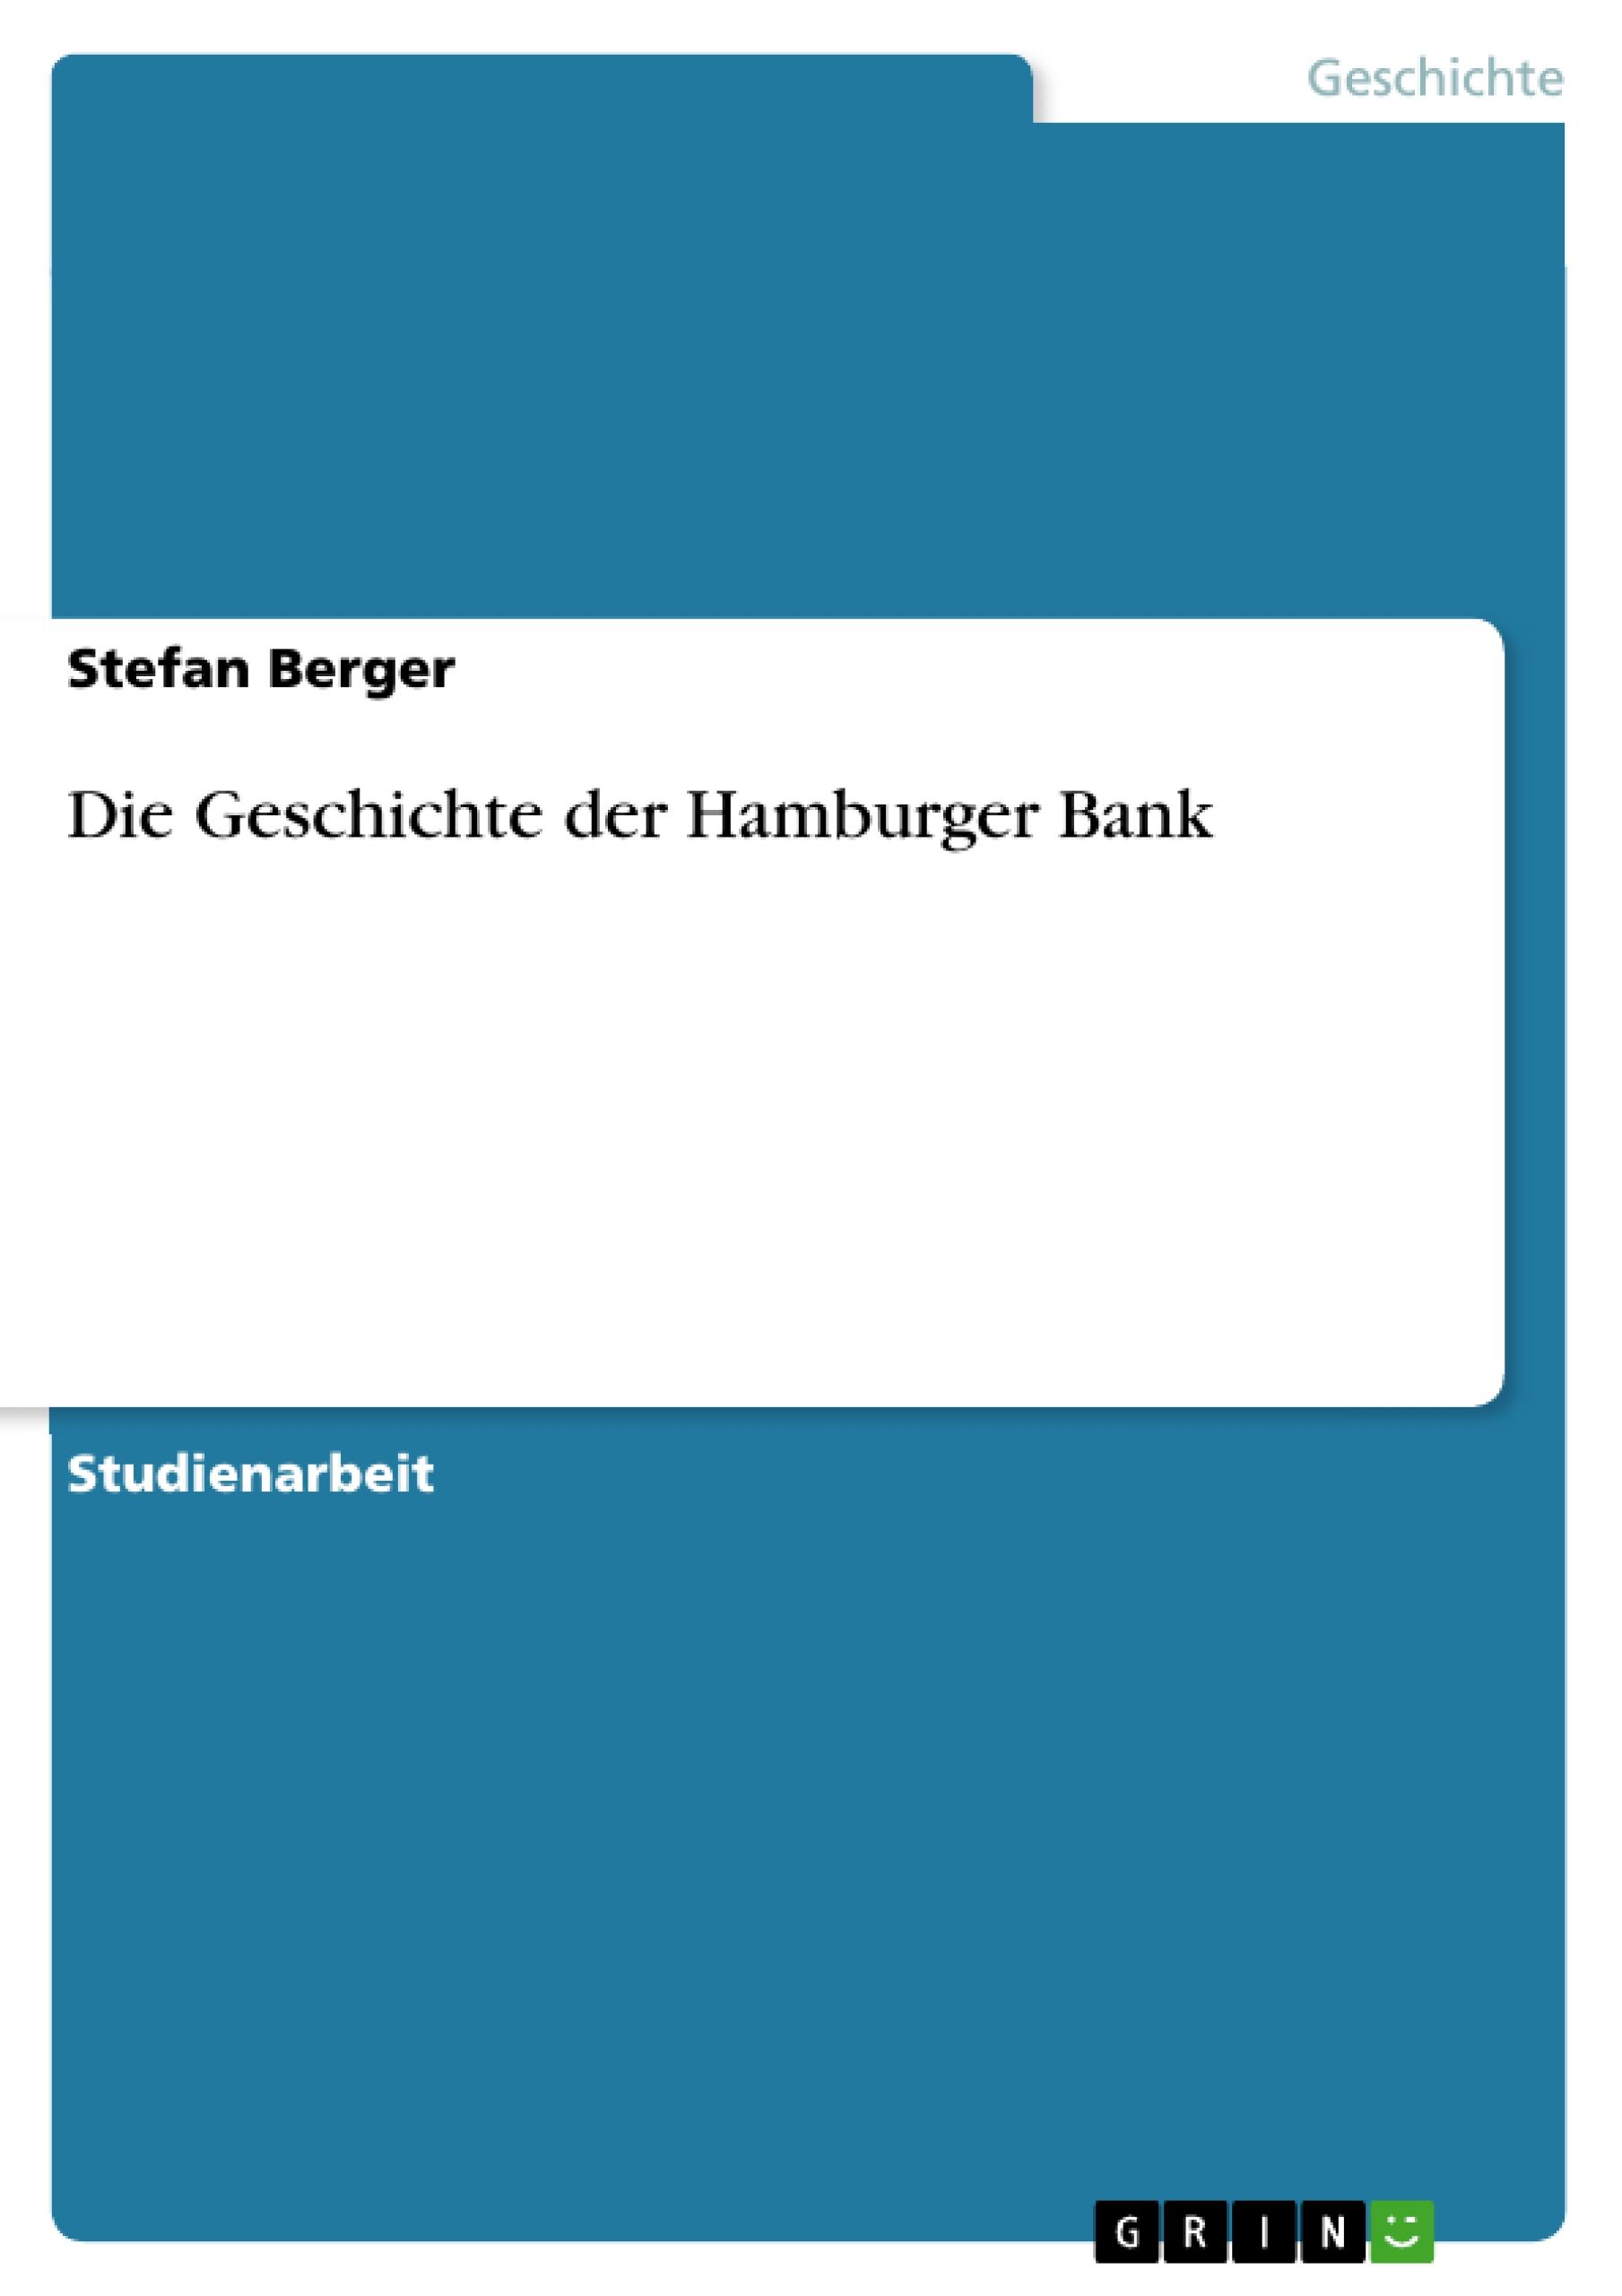 Die Geschichte der Hamburger Bank - Berger, Stefan